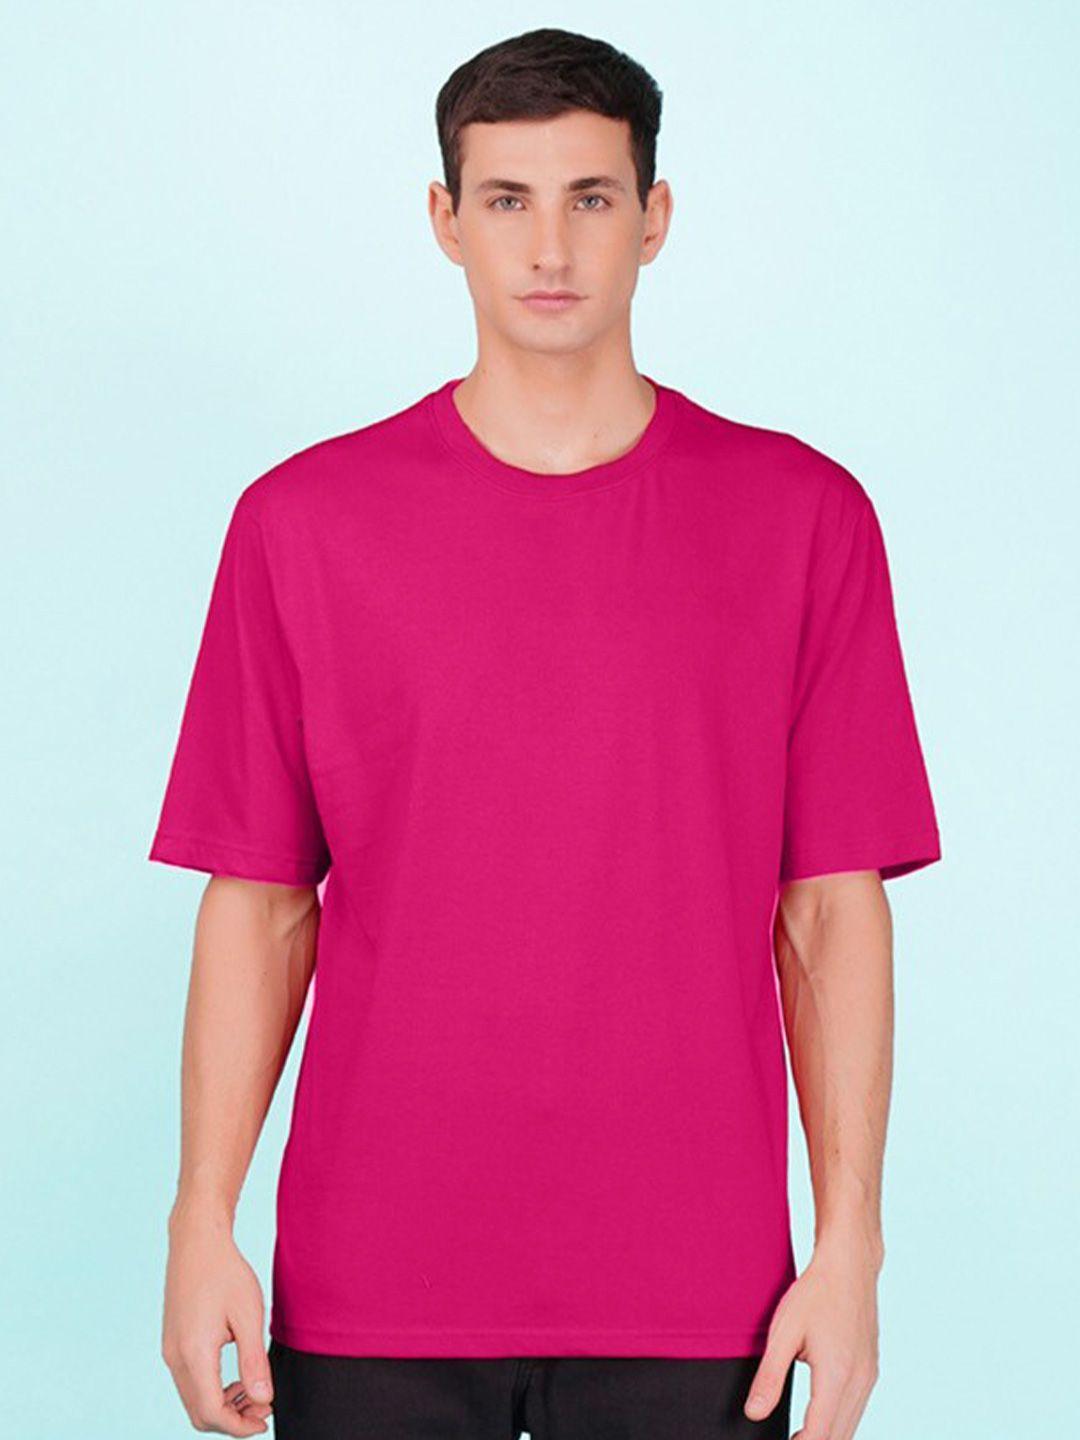 nusyl-round-neck-oversized-t-shirt